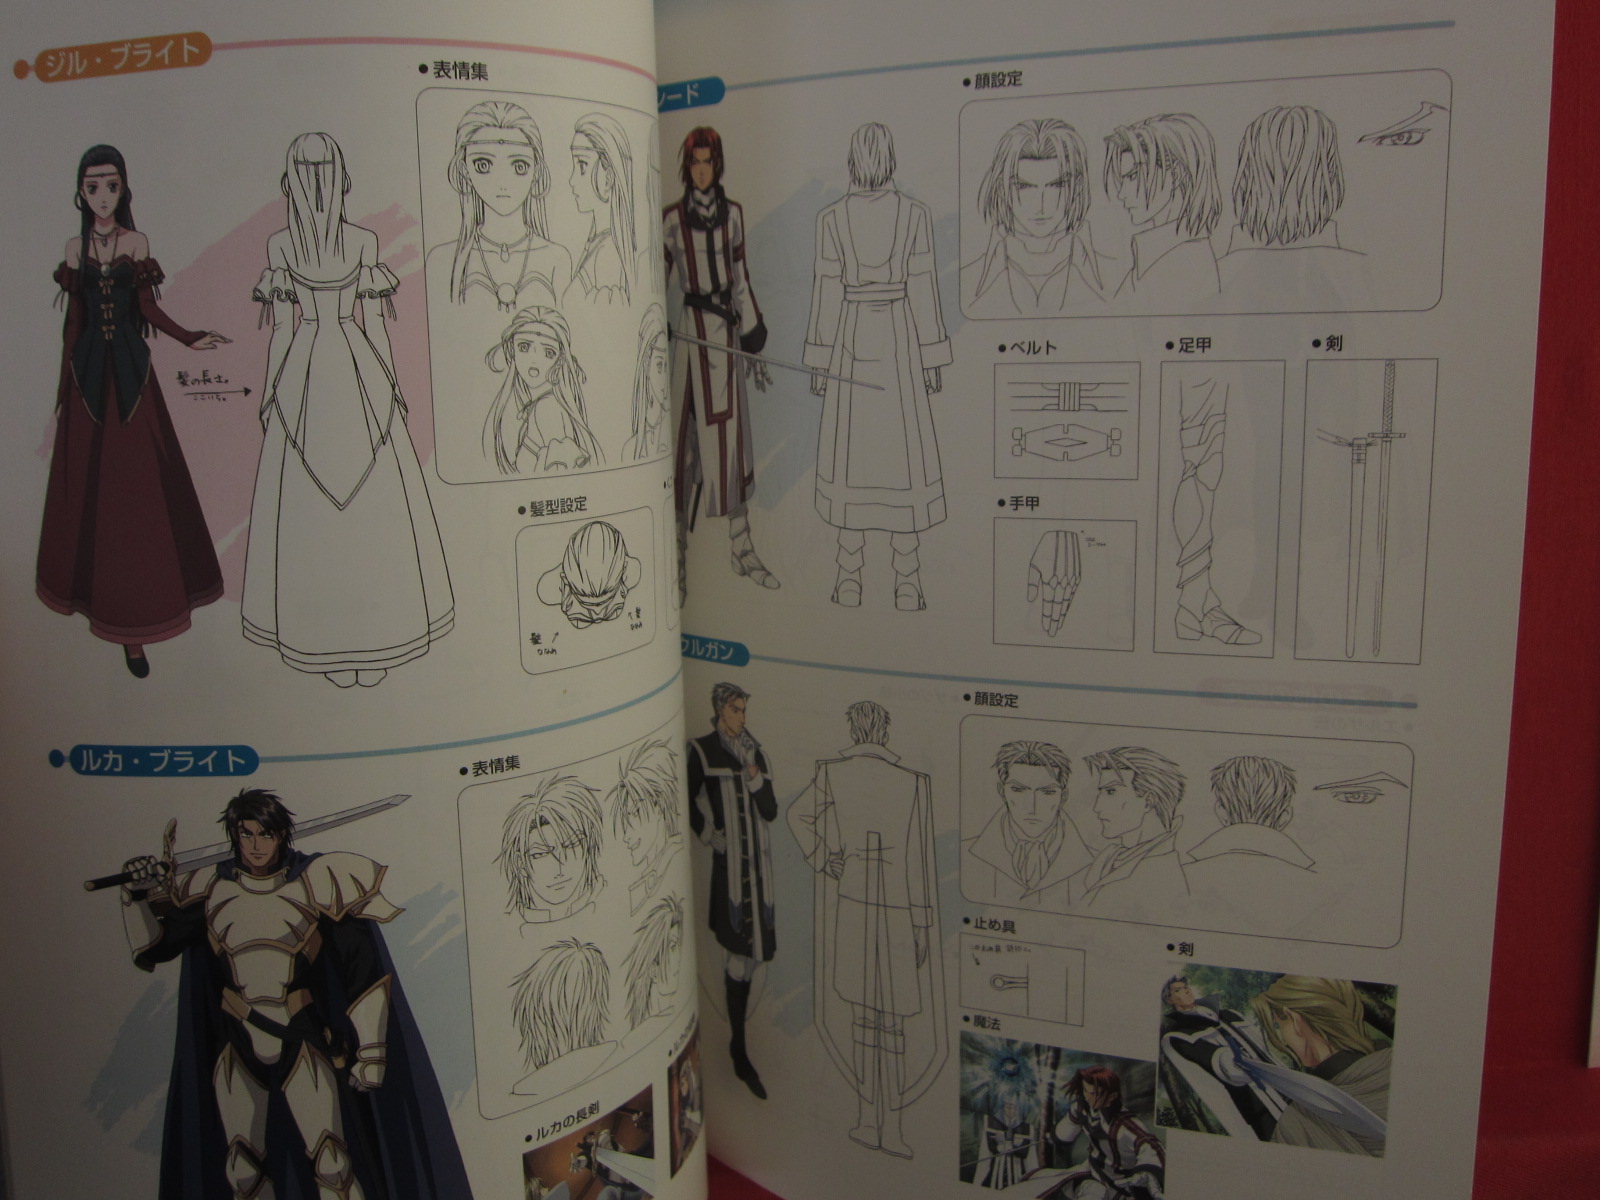 Genso Suikoden Gensou Shinsho Fan Book Anime Art Book Online Com